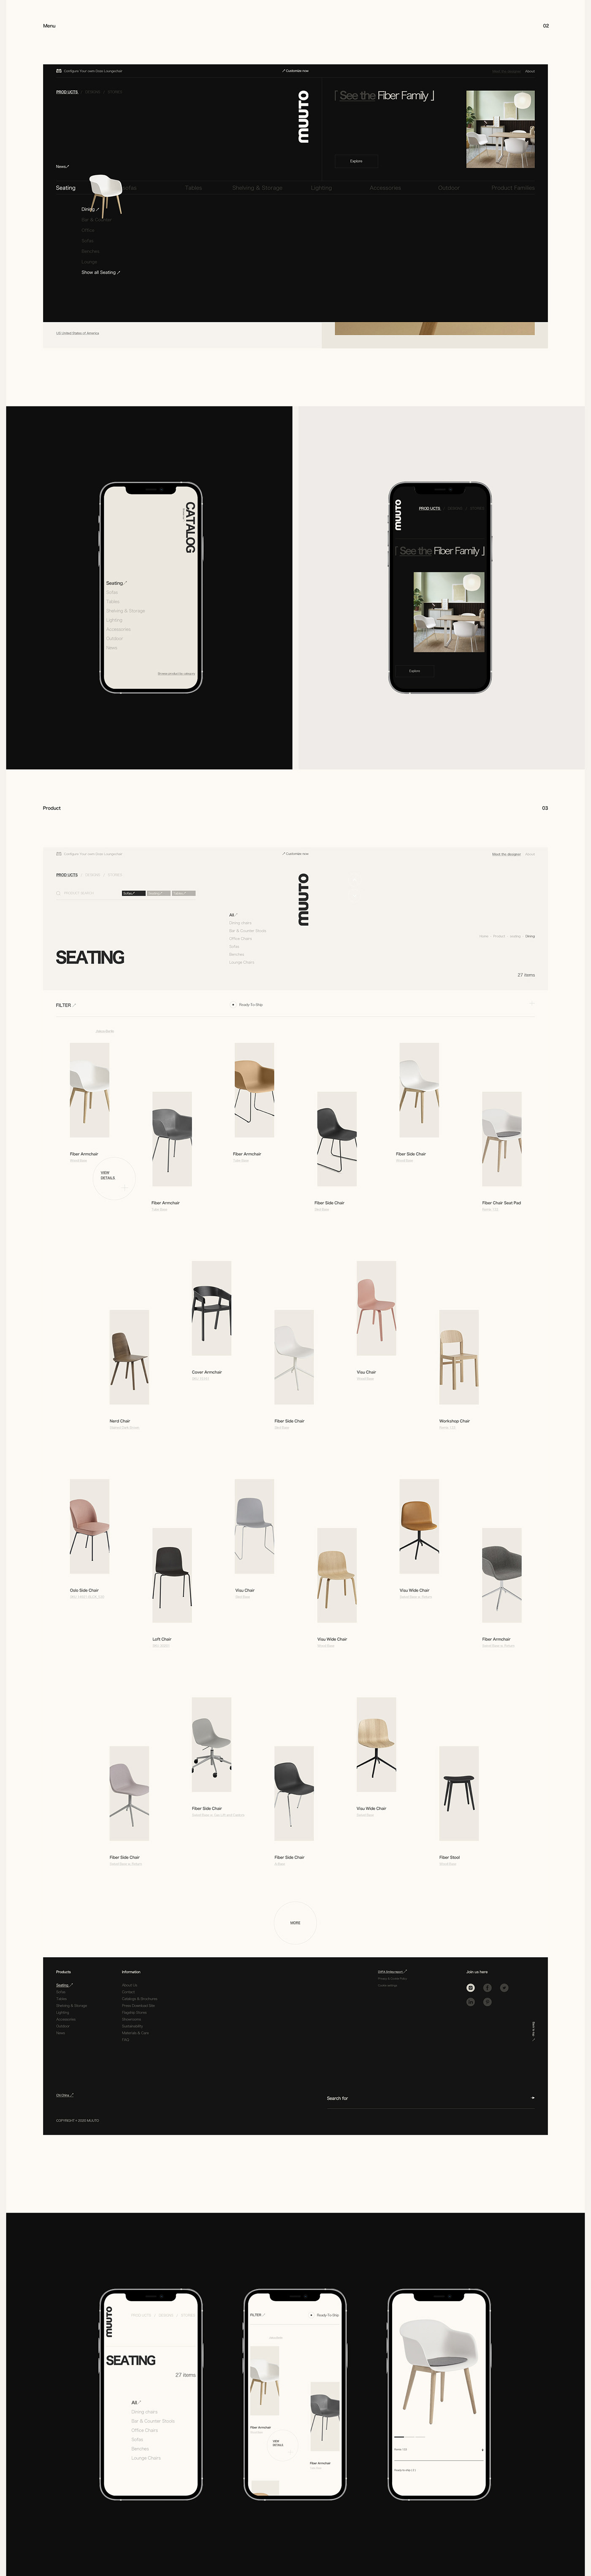 elegance furniture home Muuto simplicity UI Unique visual webpage Website